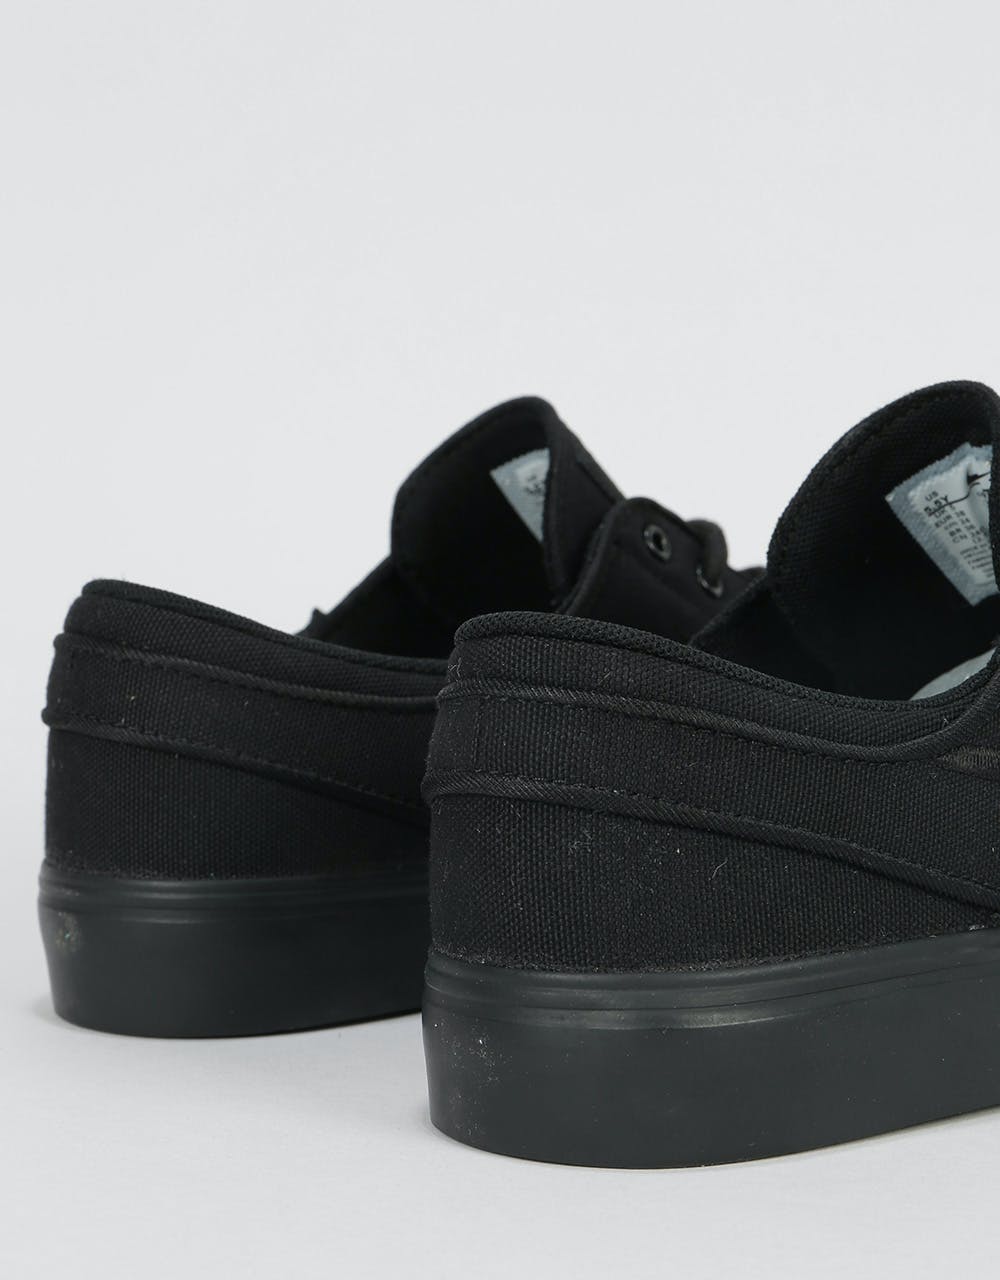 Nike SB Stefan Janoski Youth Skate Shoes - Black/Black/Anthracite